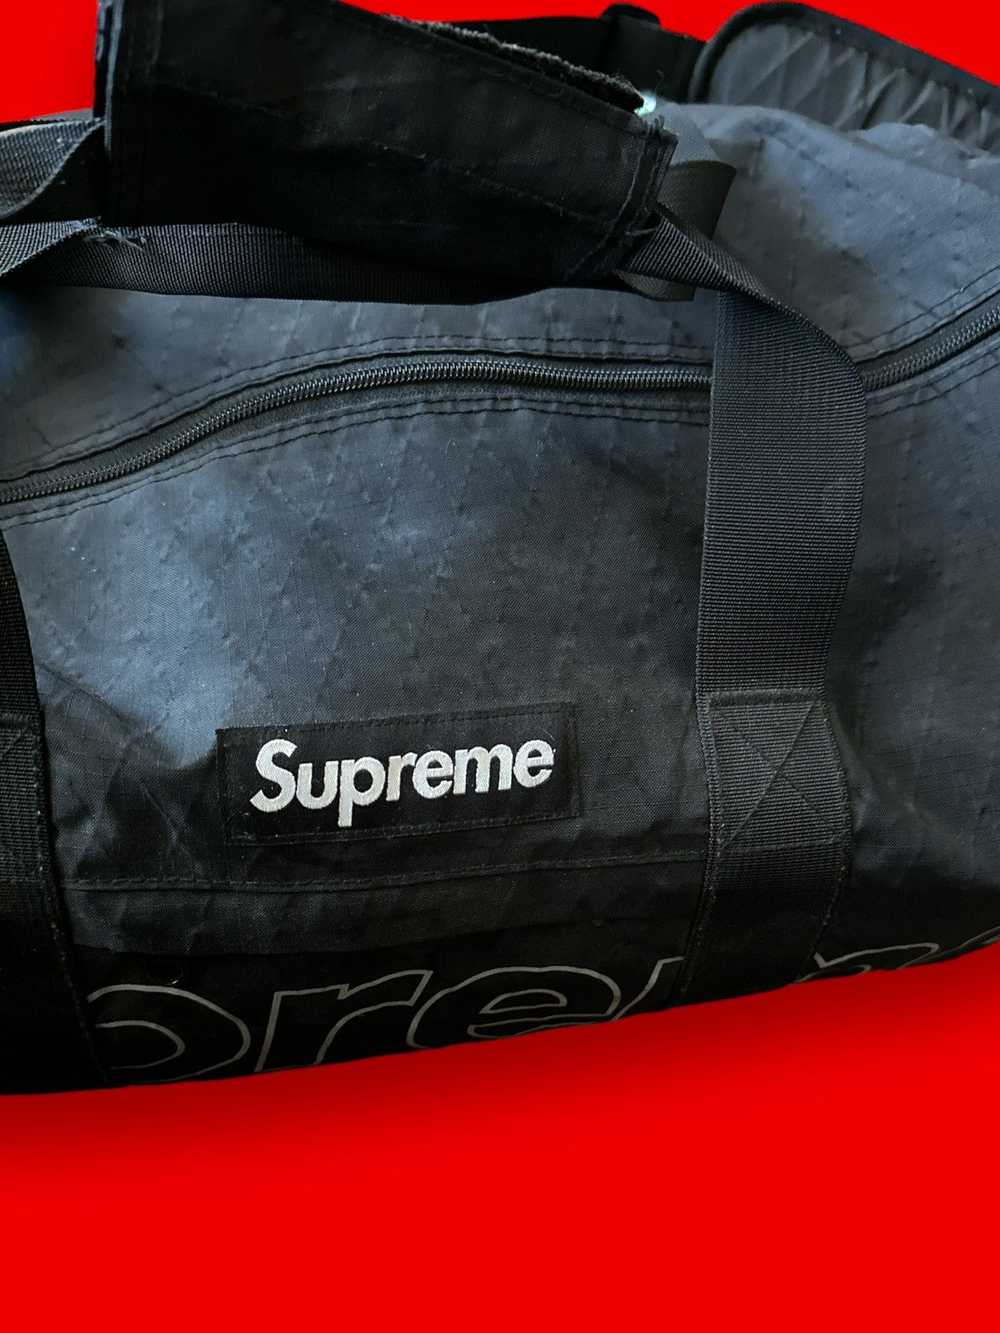 Supreme Supreme duffel bag - image 5